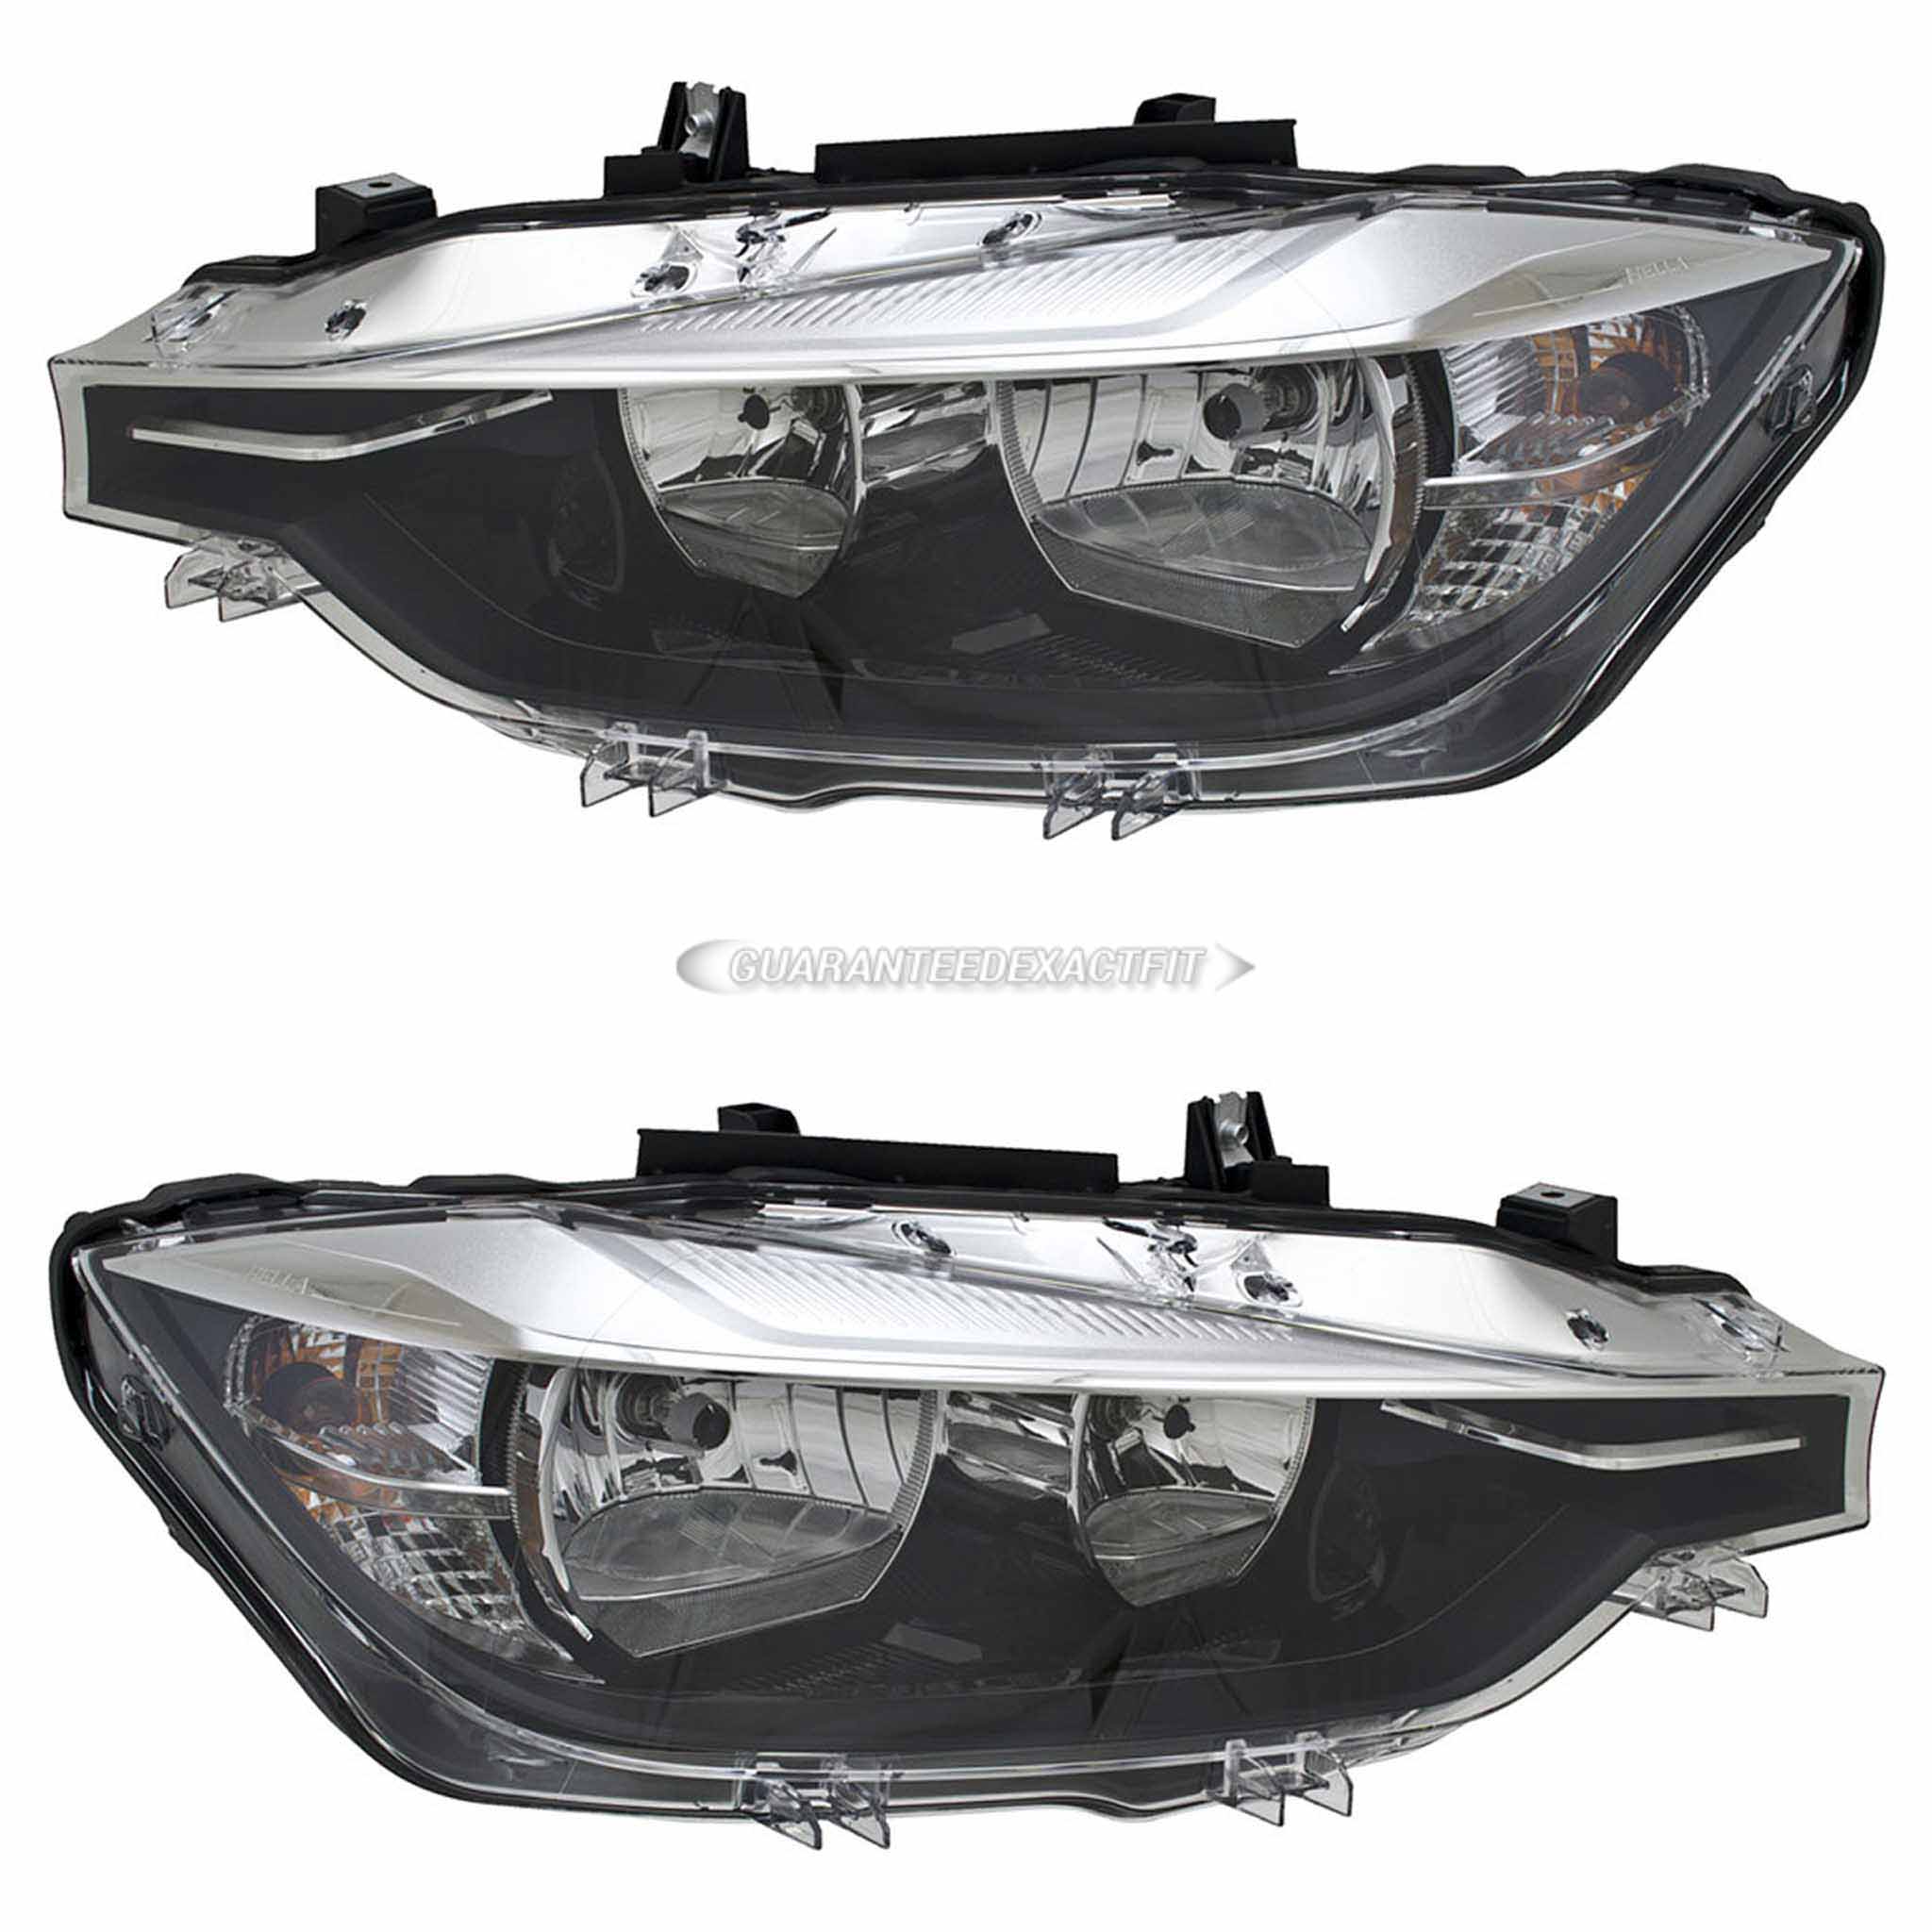  Bmw 330e headlight assembly pair 